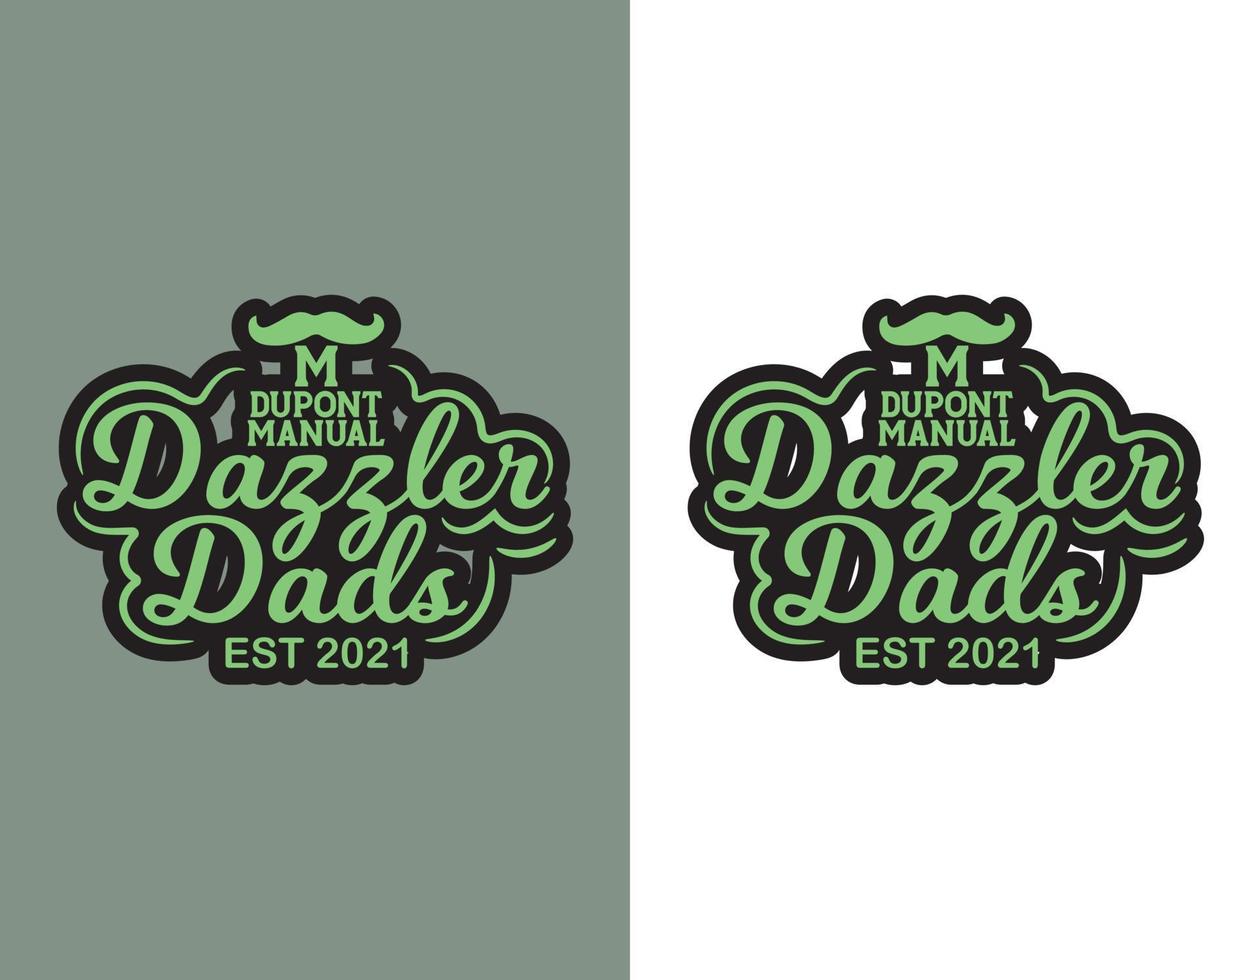 Dazzler dads t-shirt design vector